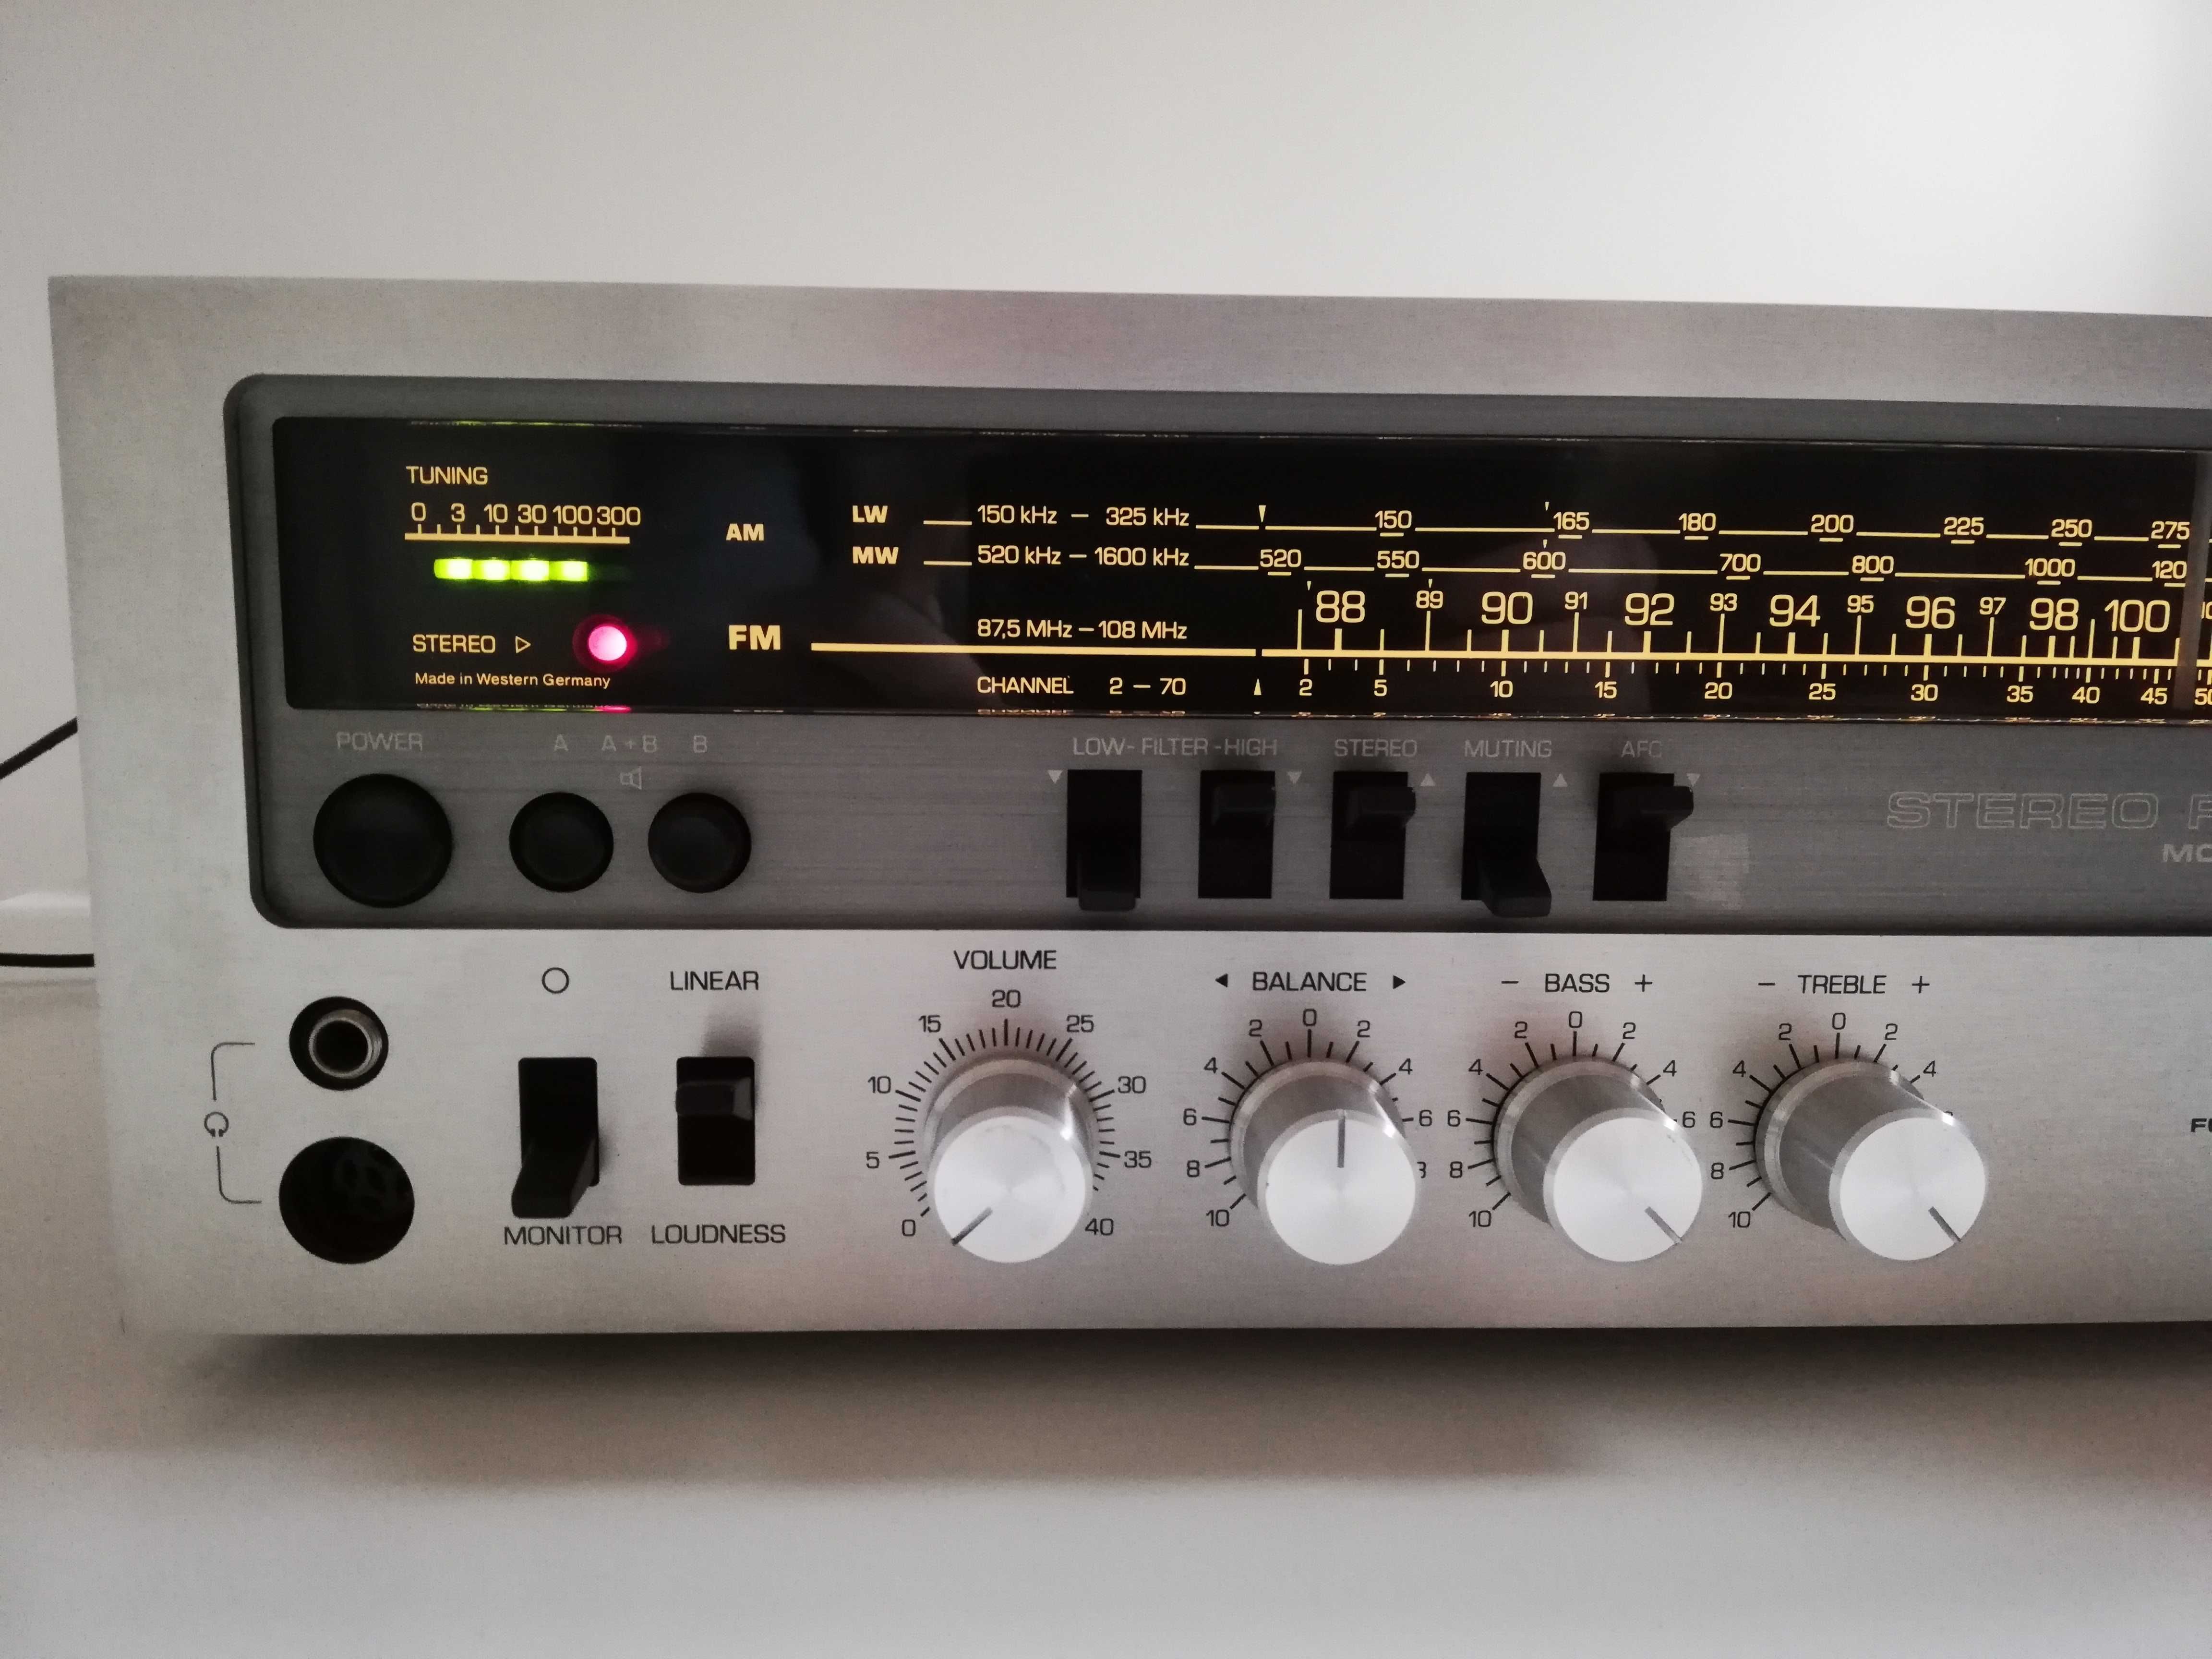 Amplificator/Tuner TELEFUNKEN TR 300 HiFi - RAR/Vintage/RFG/Impecabil